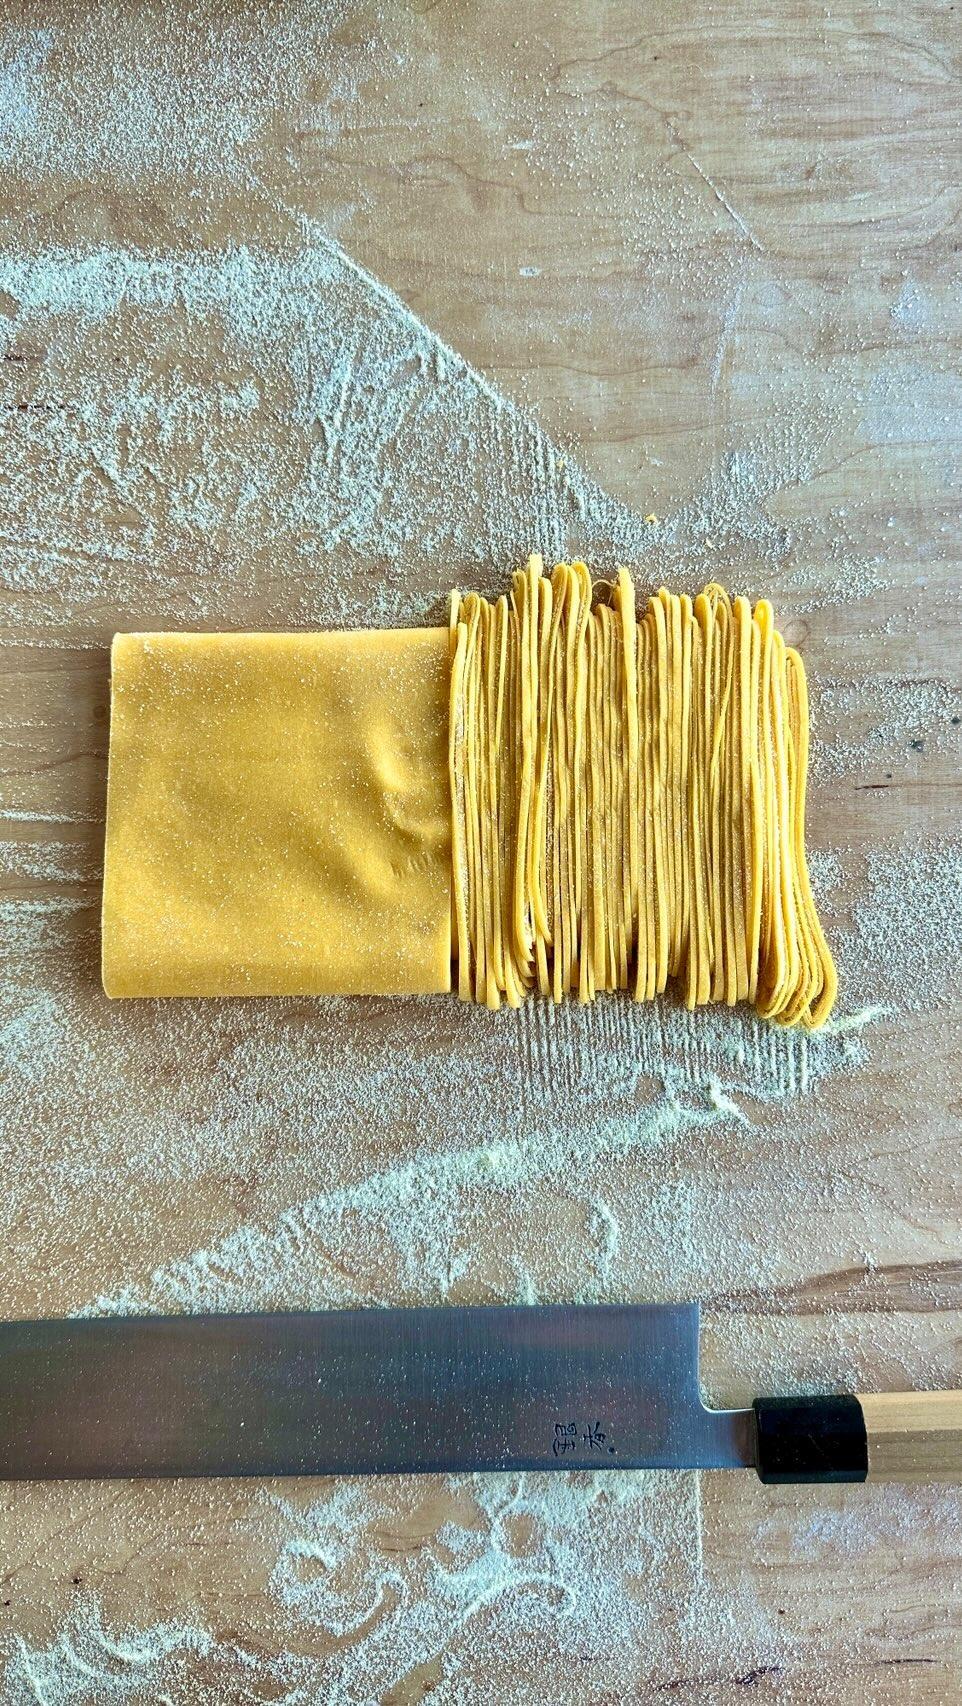 class="content__text"
 Flow State
🌕
 #pasta #chefslife #italianfood #pastalover #madebyhand #flowstate #satisfyingvideos 
 